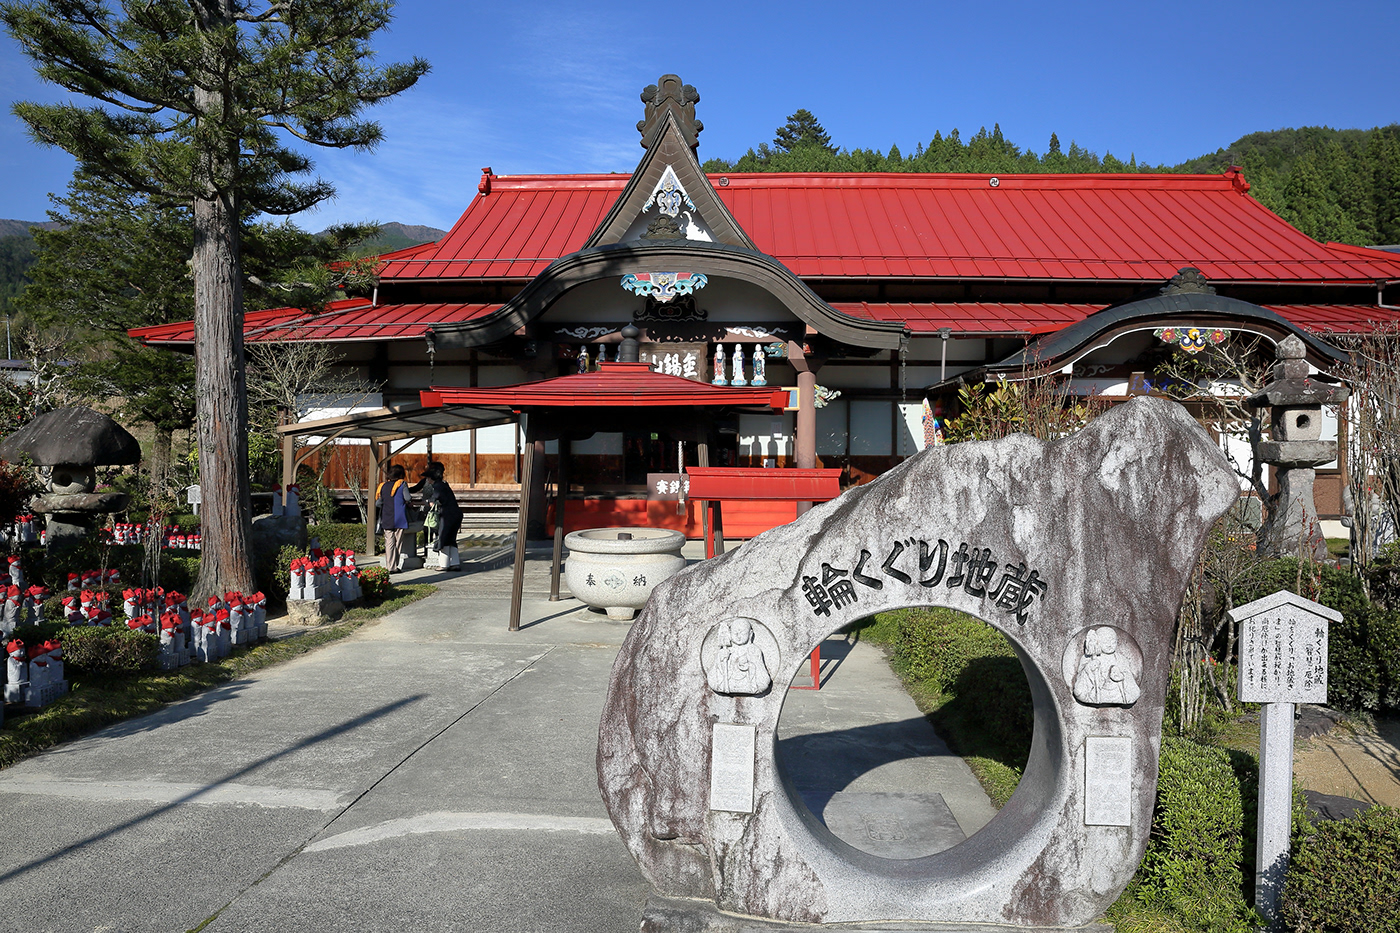 temple japan photo National treasure cultural property history Landscape